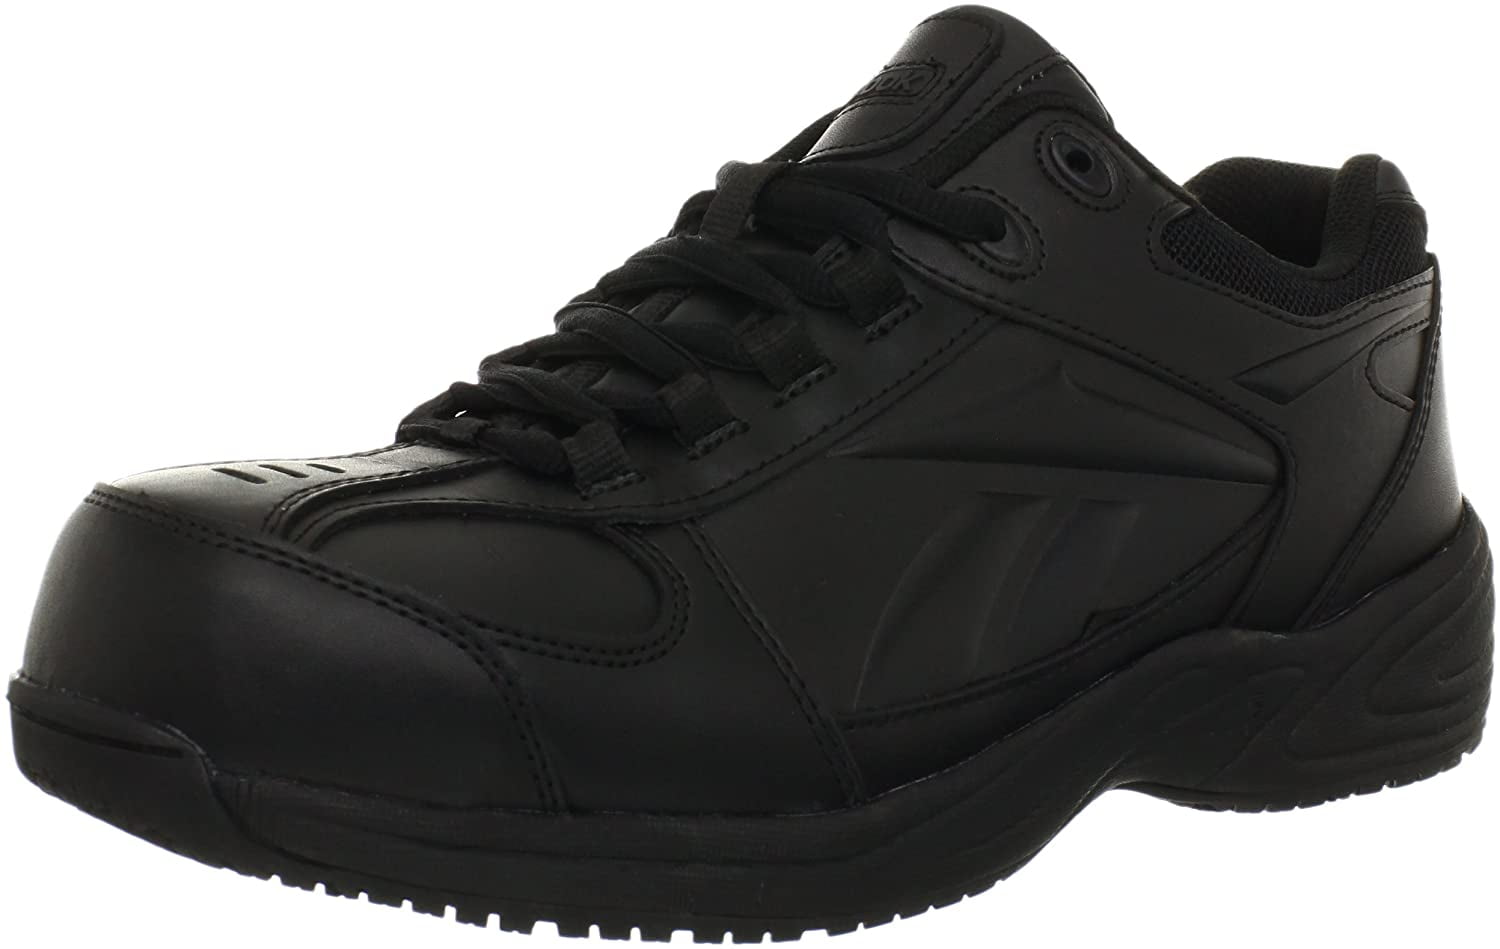 Reebok Work Men's Jorie RB1100 Work Shoe,Black,12 W US | Walmart Canada